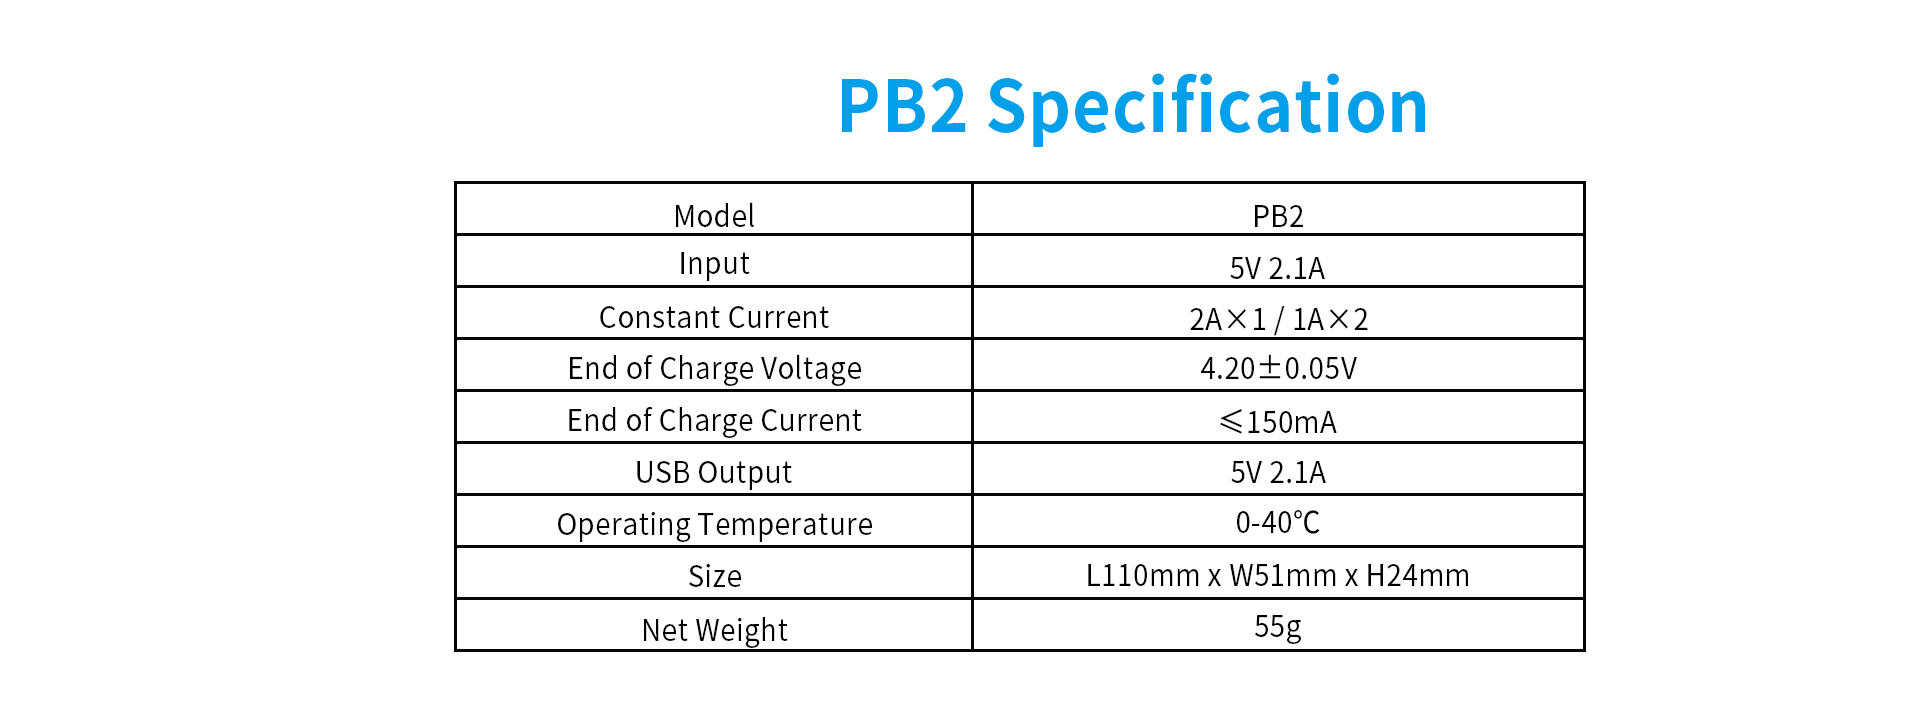 PB2 specification